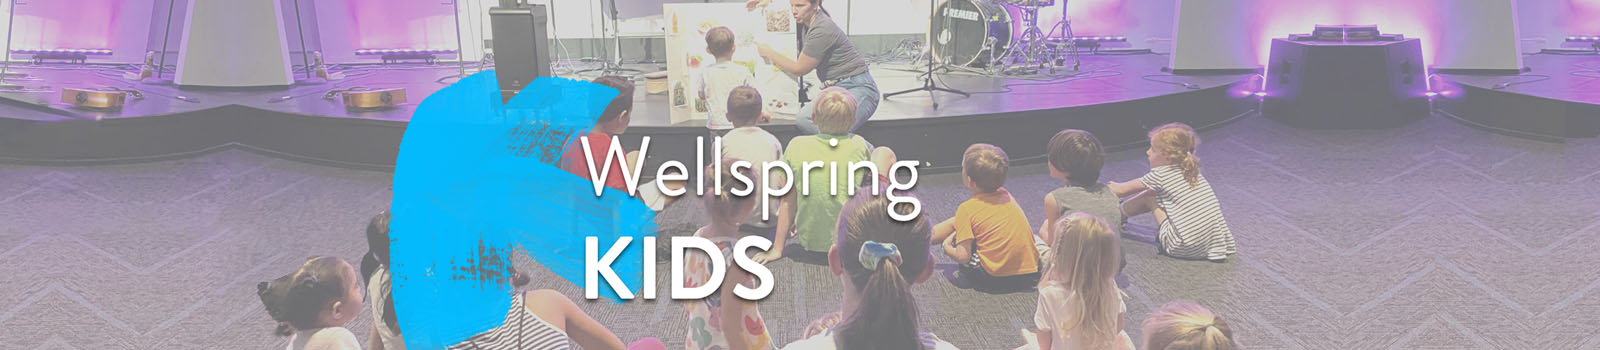 Wellspring_Kids2